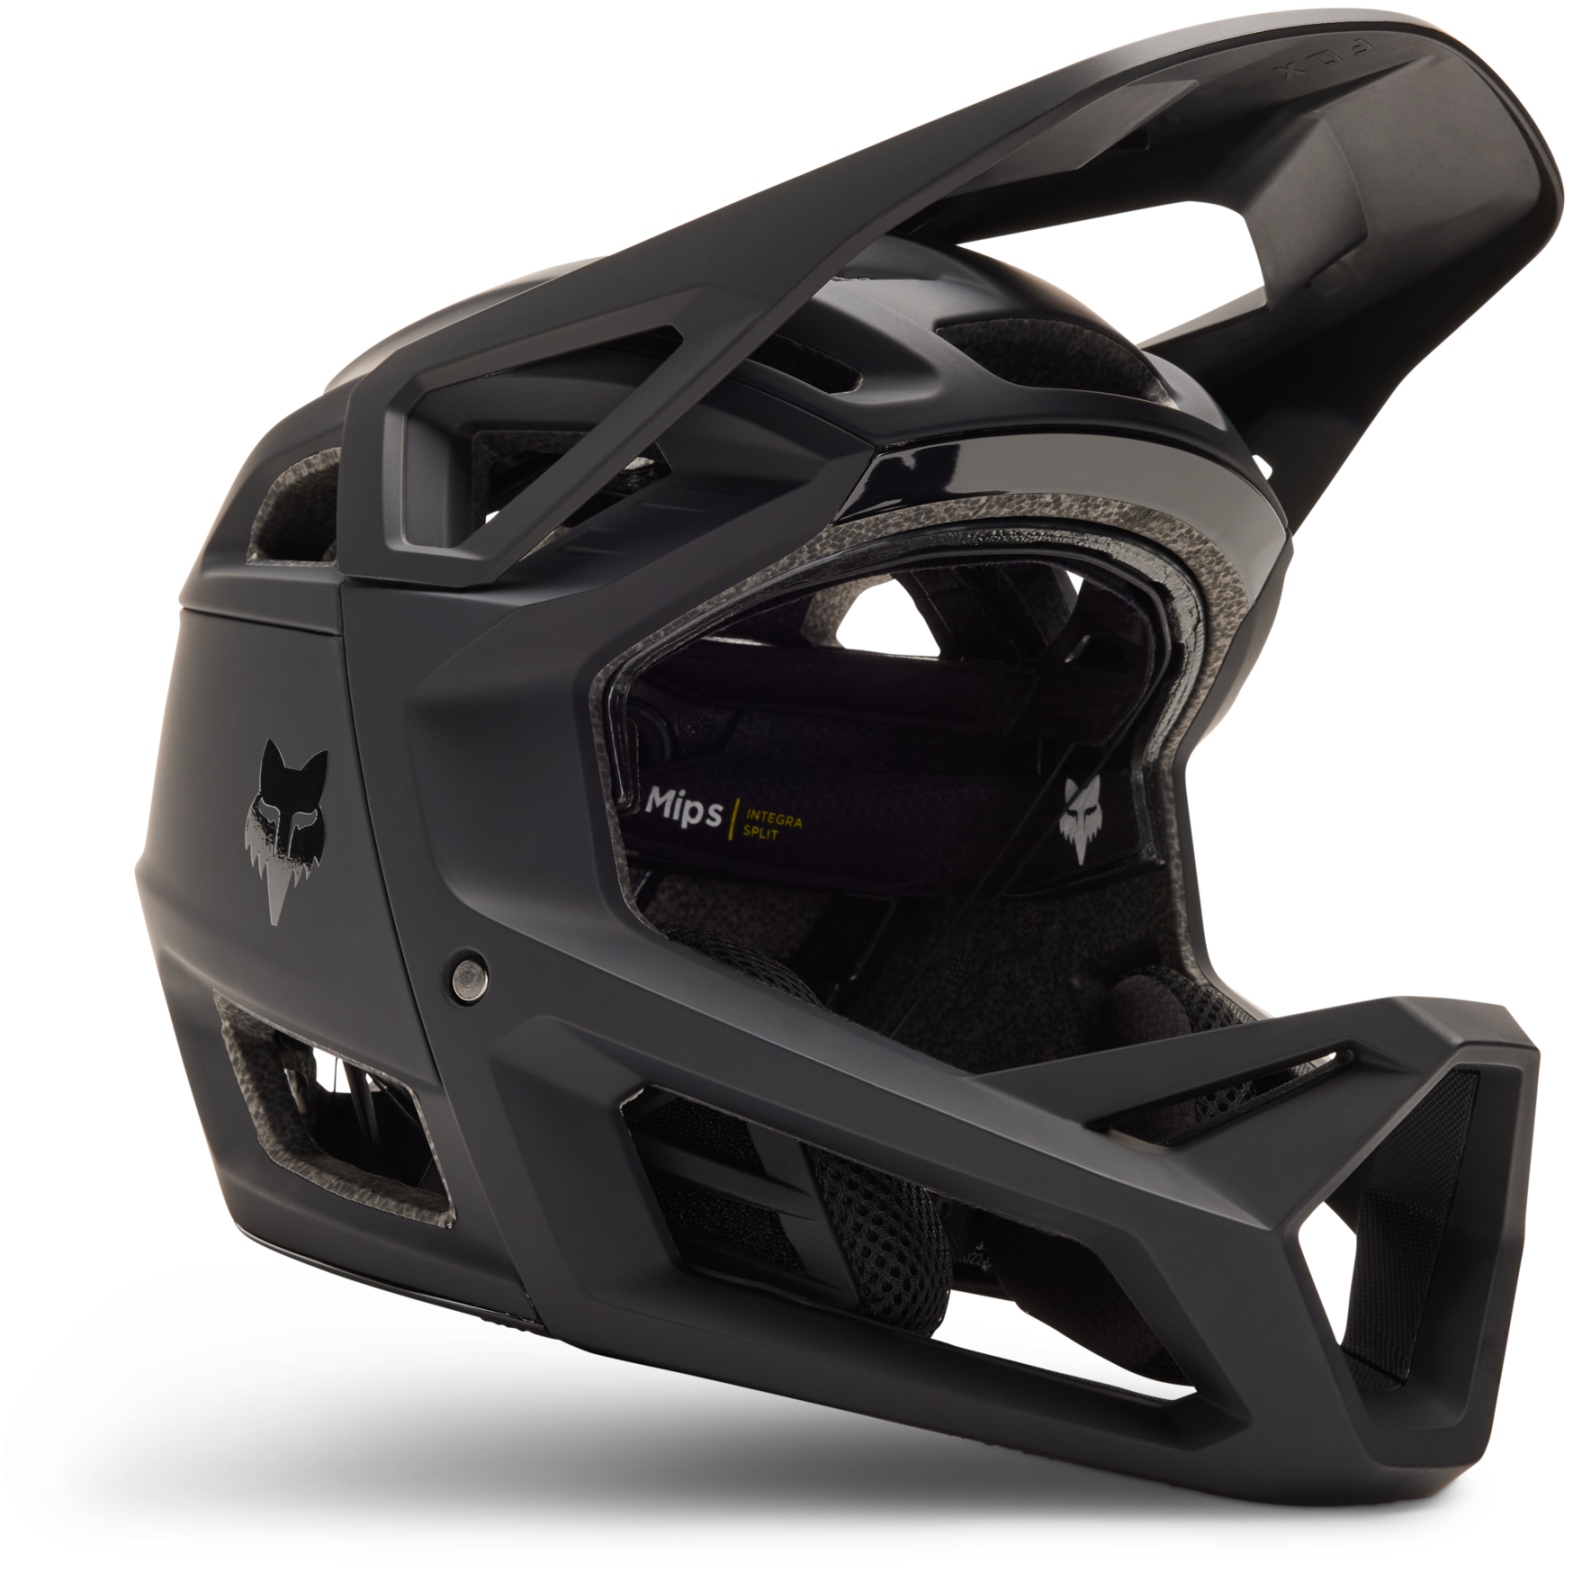 Produktbild von FOX Proframe RS Full Face Helm - matte black